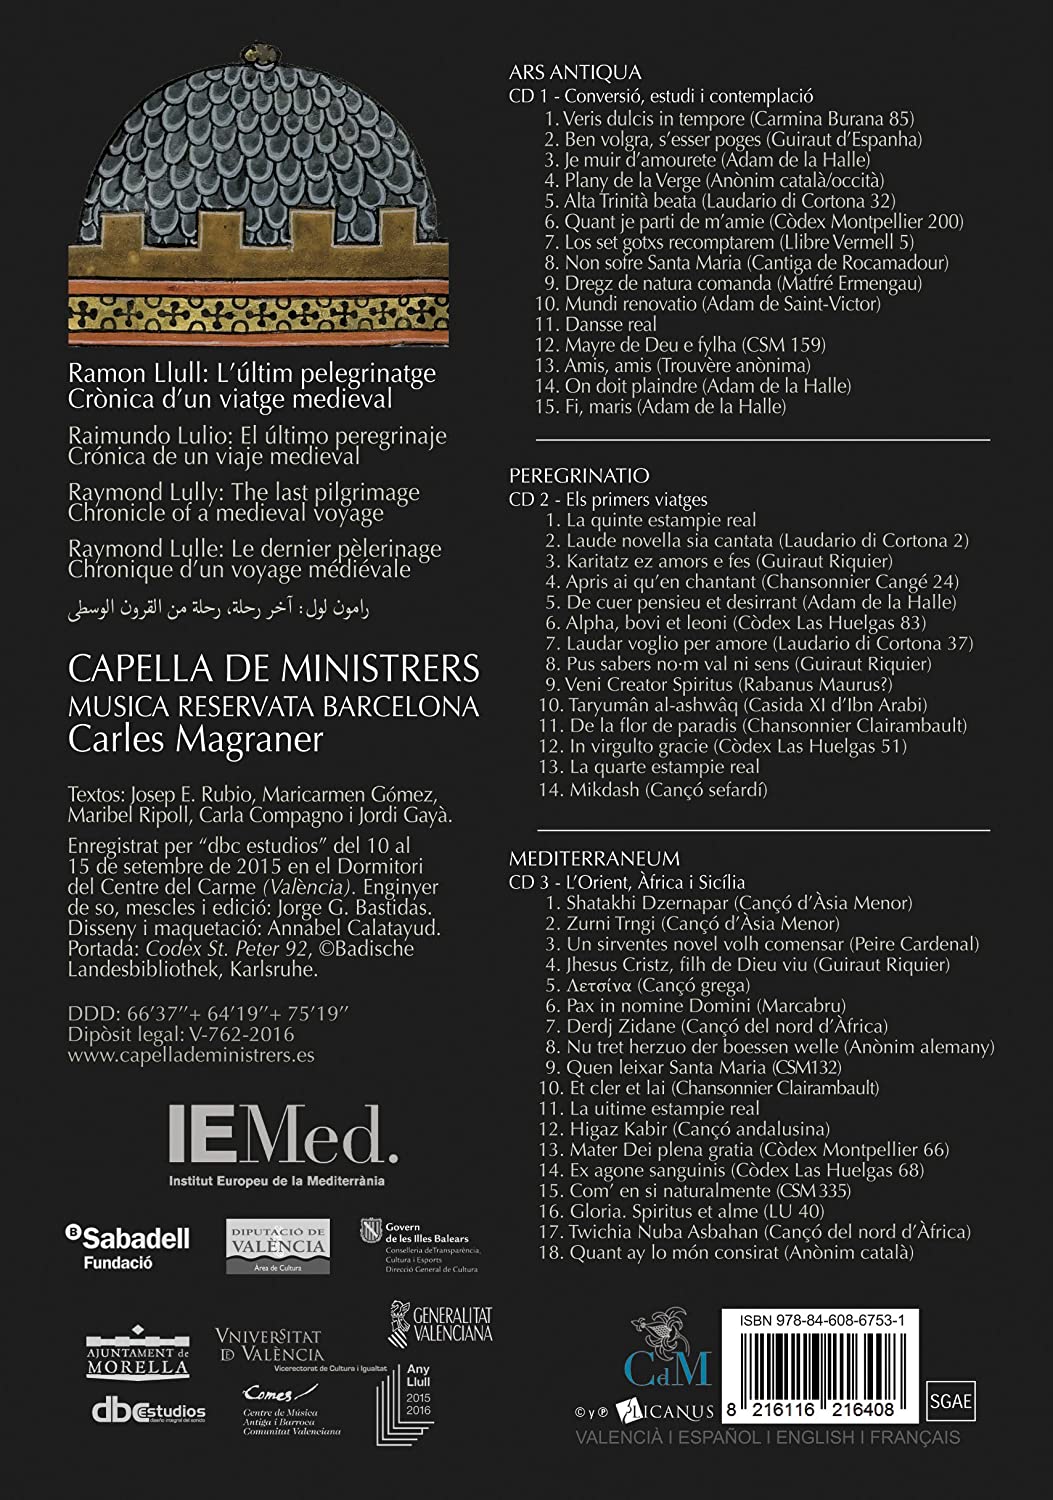 Ramon Llull: L’últim pelegrinatge - Ars antiqua, Peregrinatio, Mediterraneum - slide-1